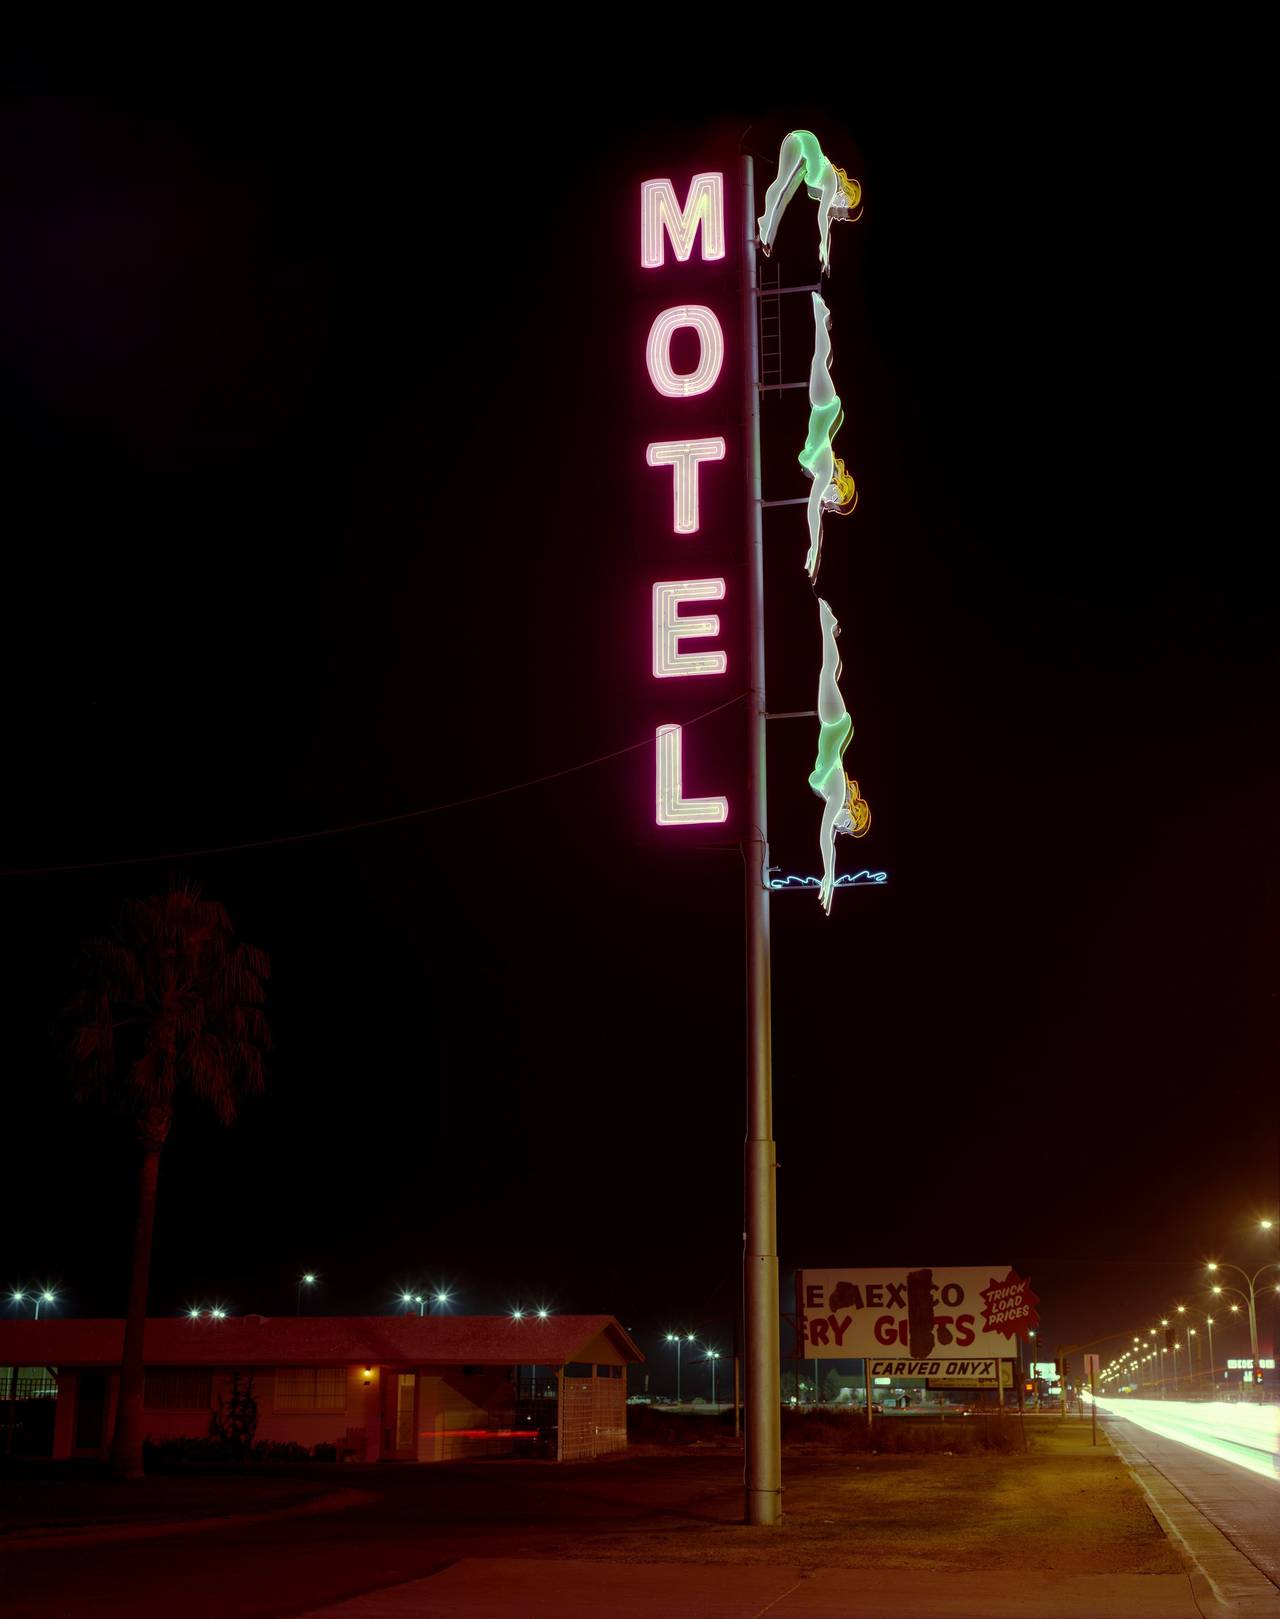 Steve Fitch Landscape Photograph - Starlite Motel, Mesa, Arizona, December 28, 1980